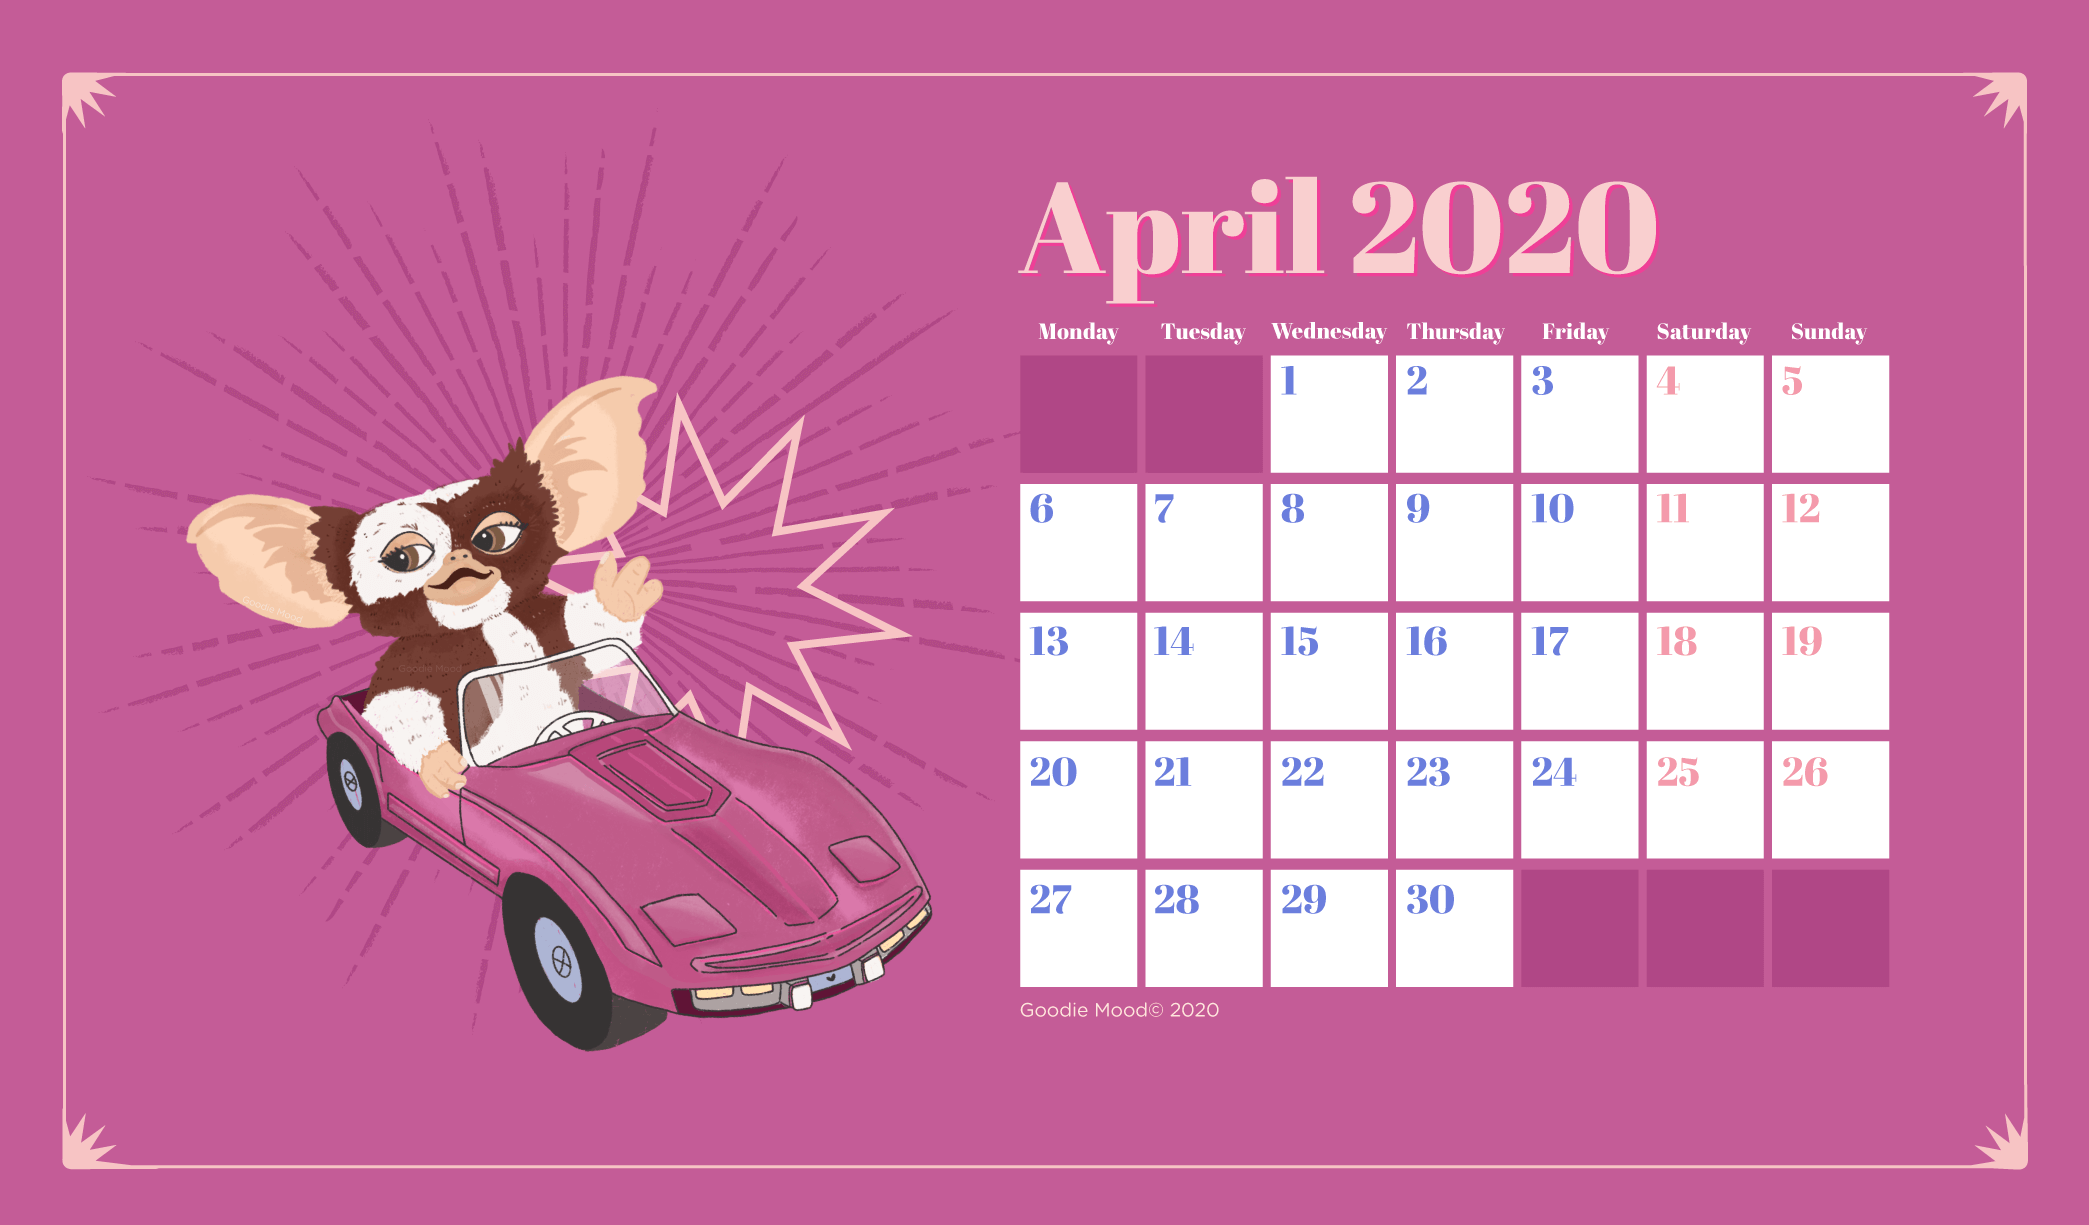 Fond d'écran et calendrier Gremlins pour avril 2020 #wallpaper goodiemood le blog feel good